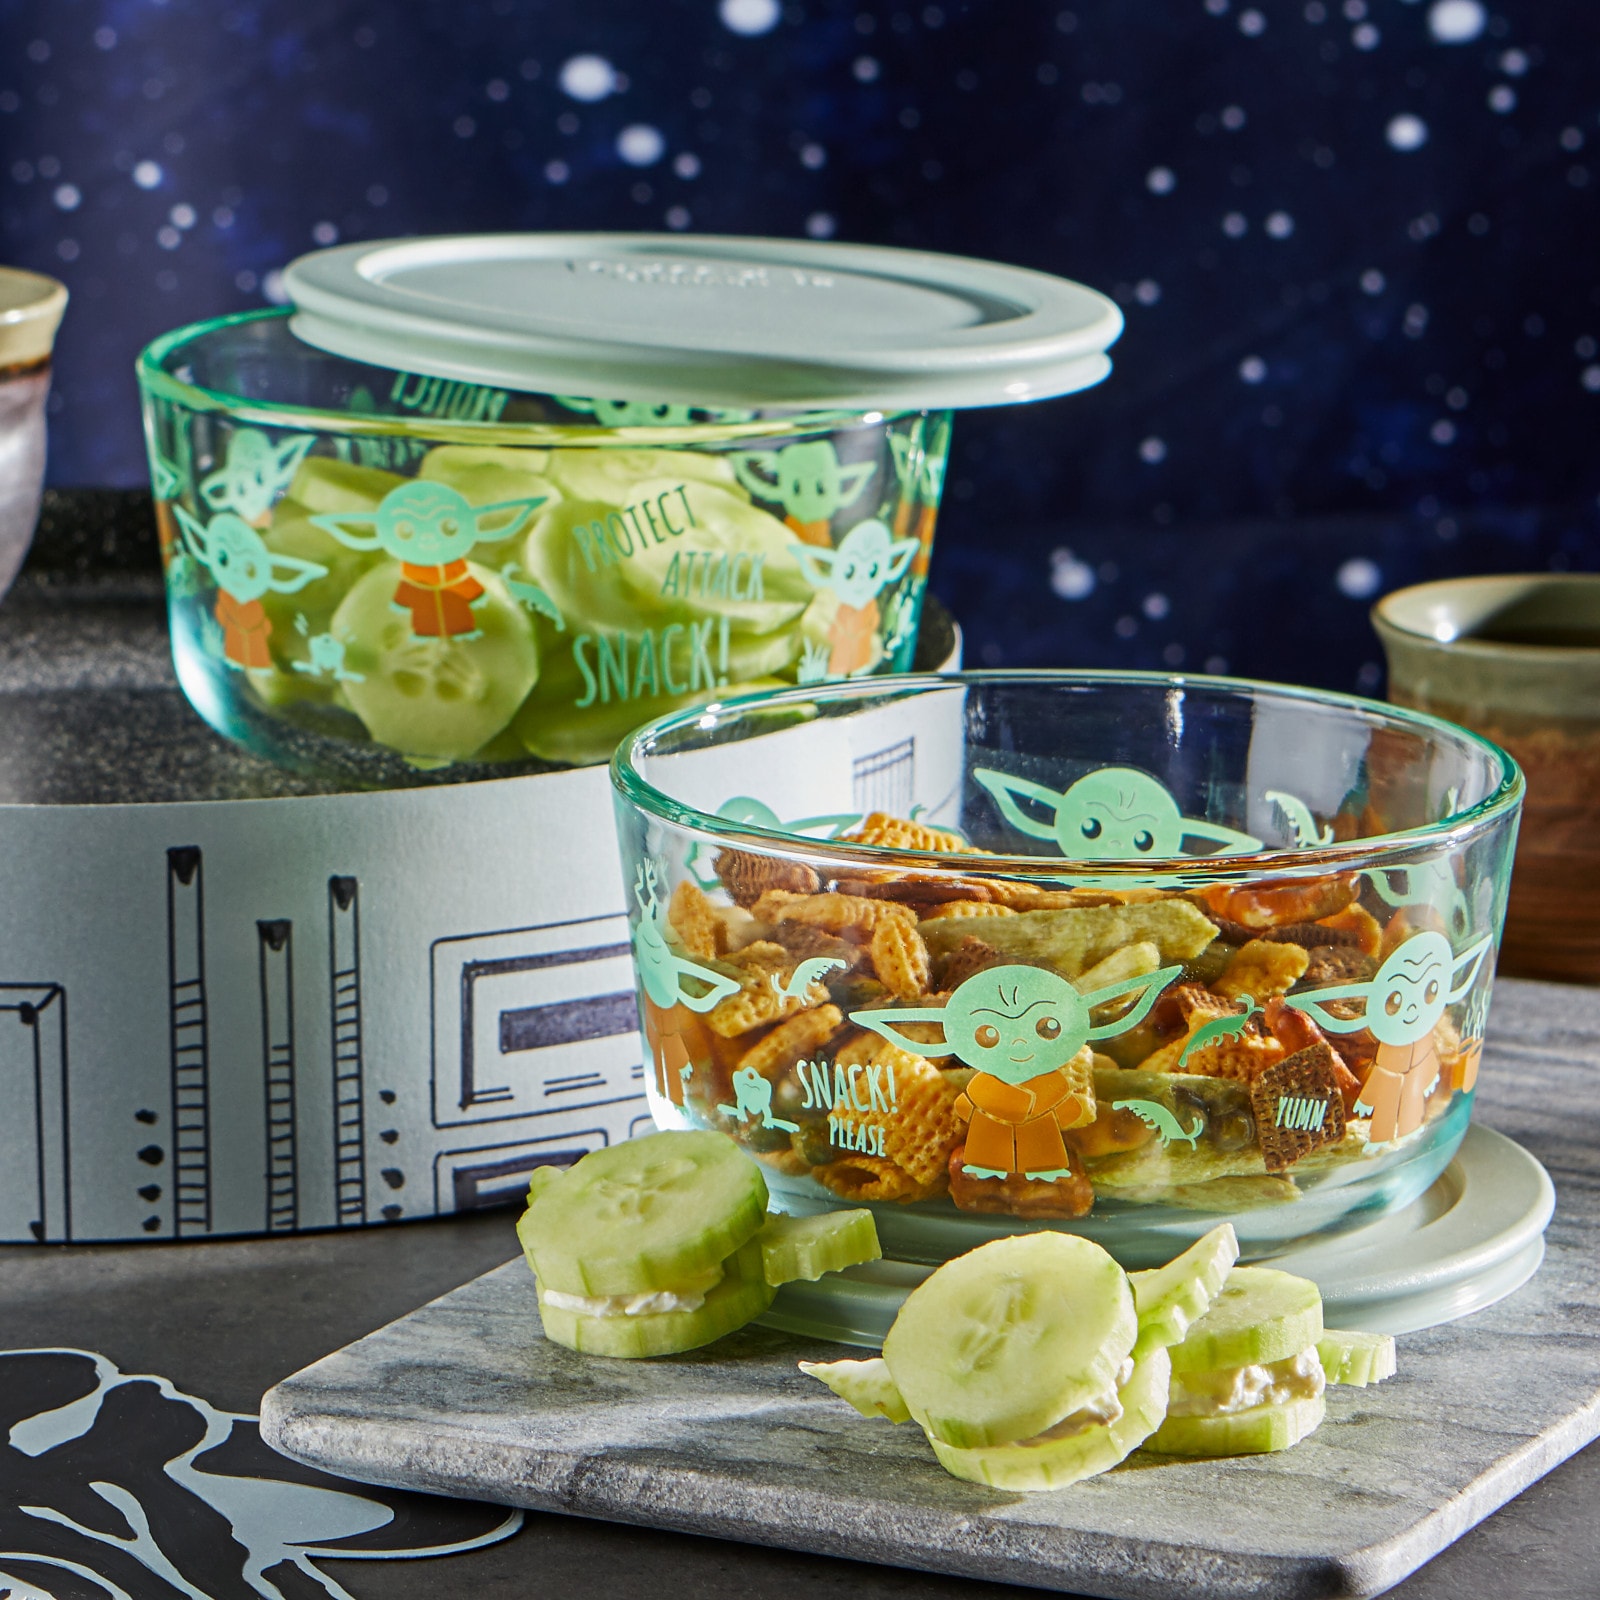 Pyrex Glass 8-Piece Star Wars Decorated Food Storage Set